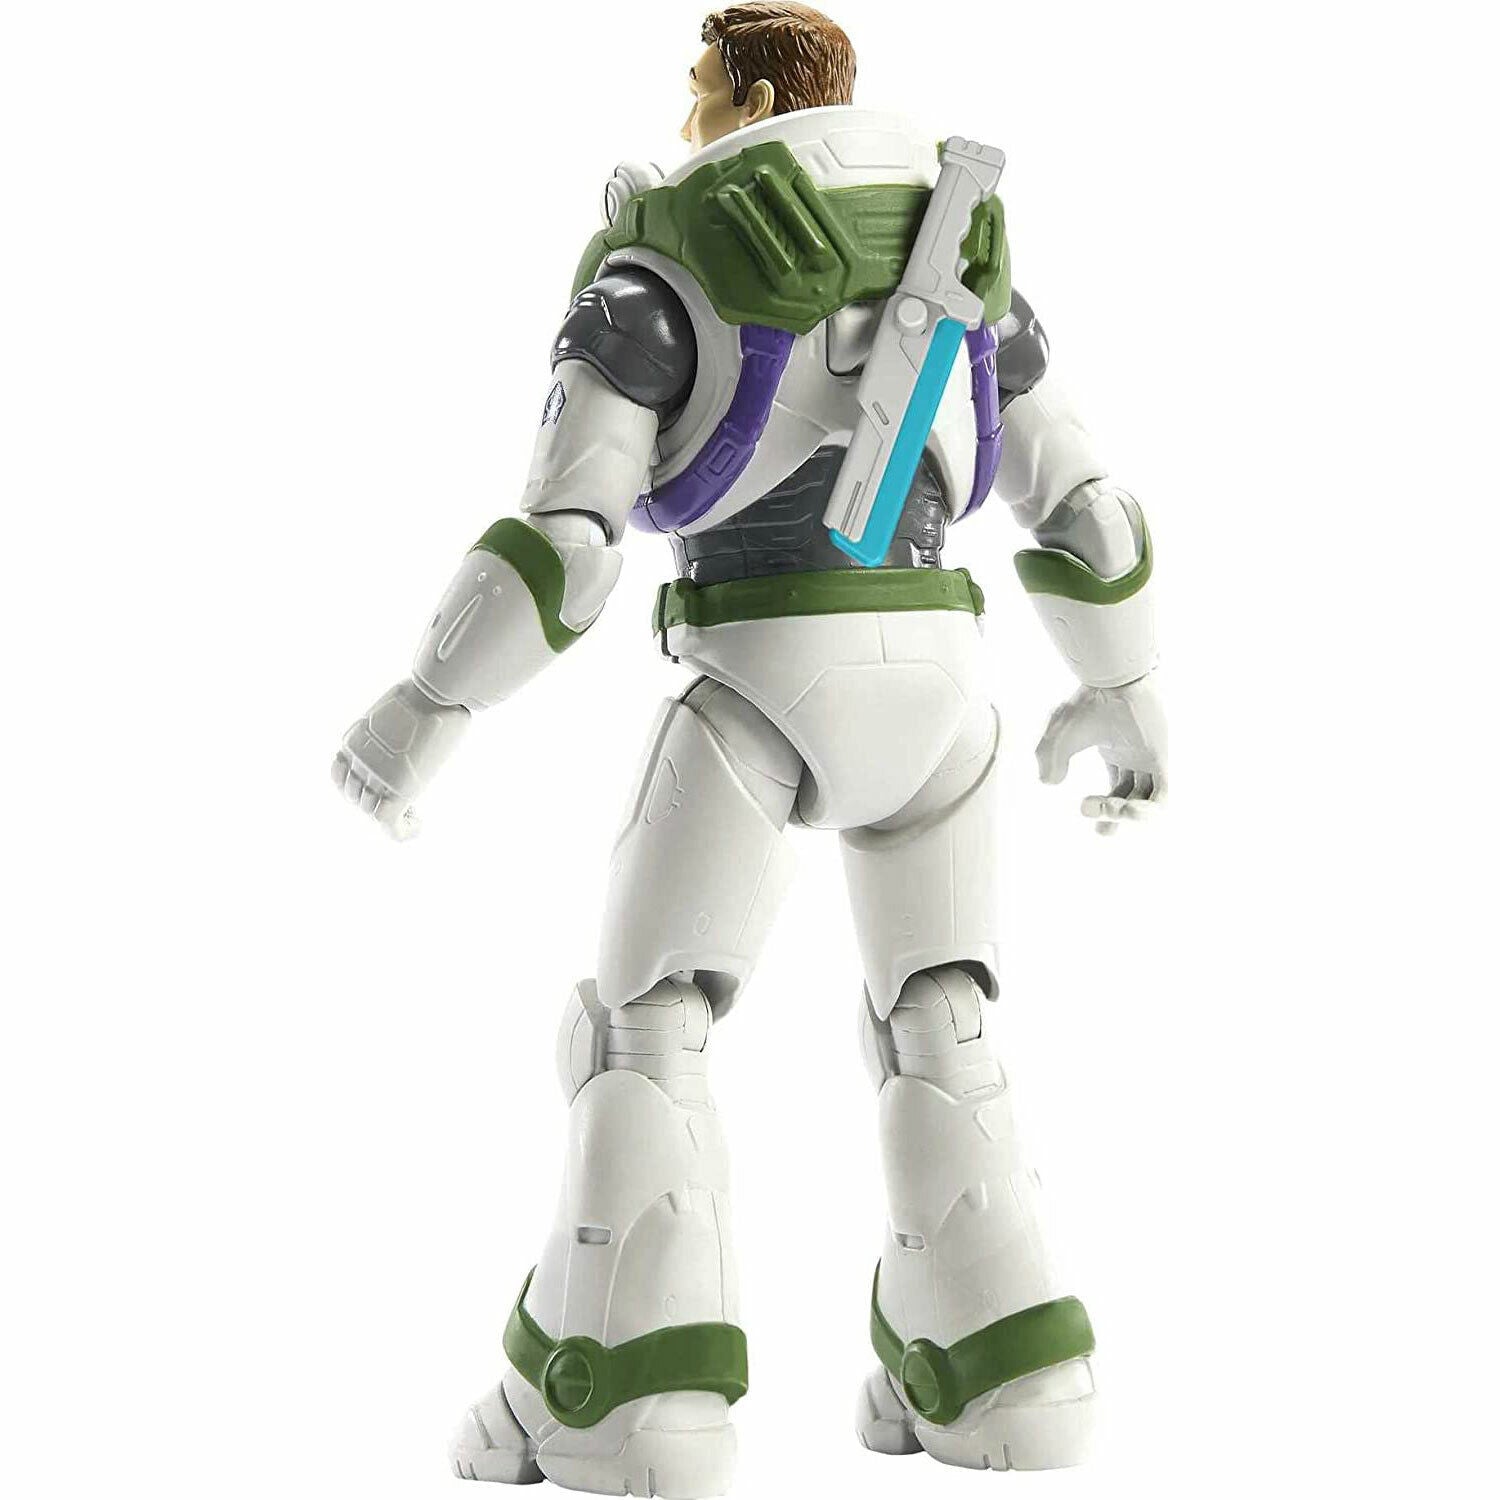 Disney Pixar Buzz Lightyear 5-Inch Space Ranger Alpha Figure